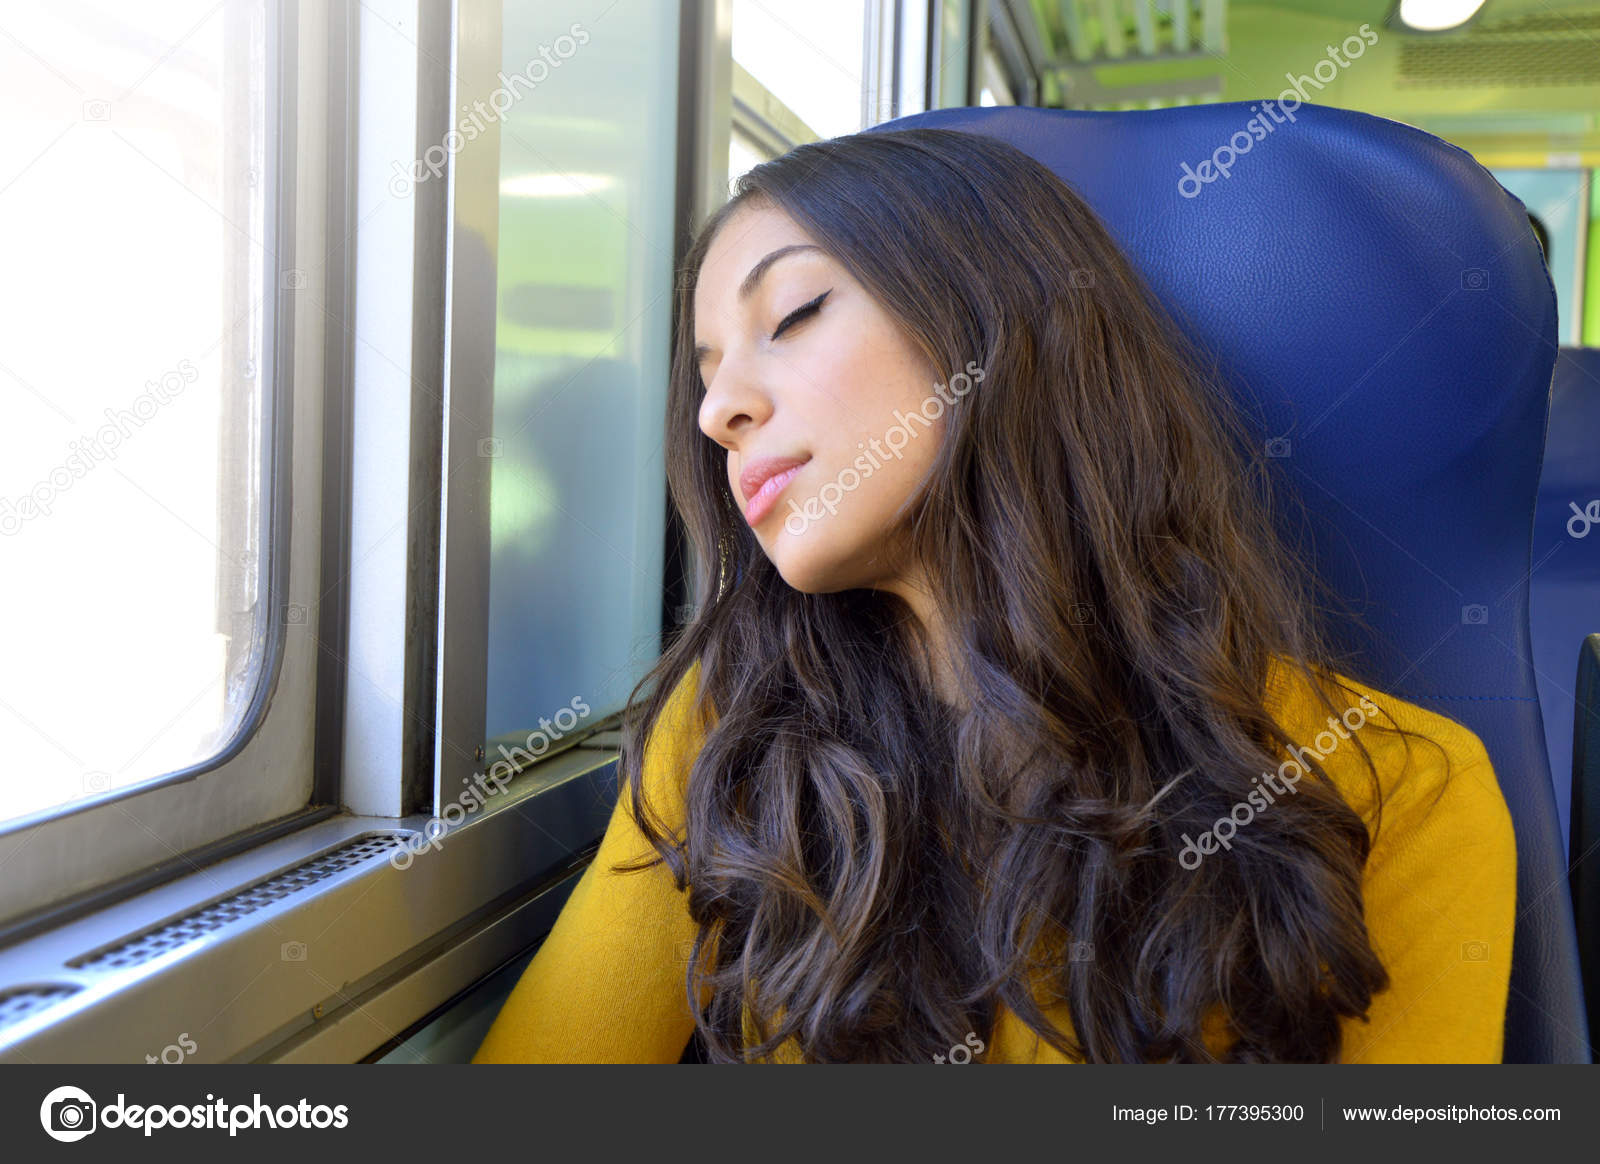 depositphotos_177395300-stock-photo-young-beautiful-woman-sleeping-sitting.jpg